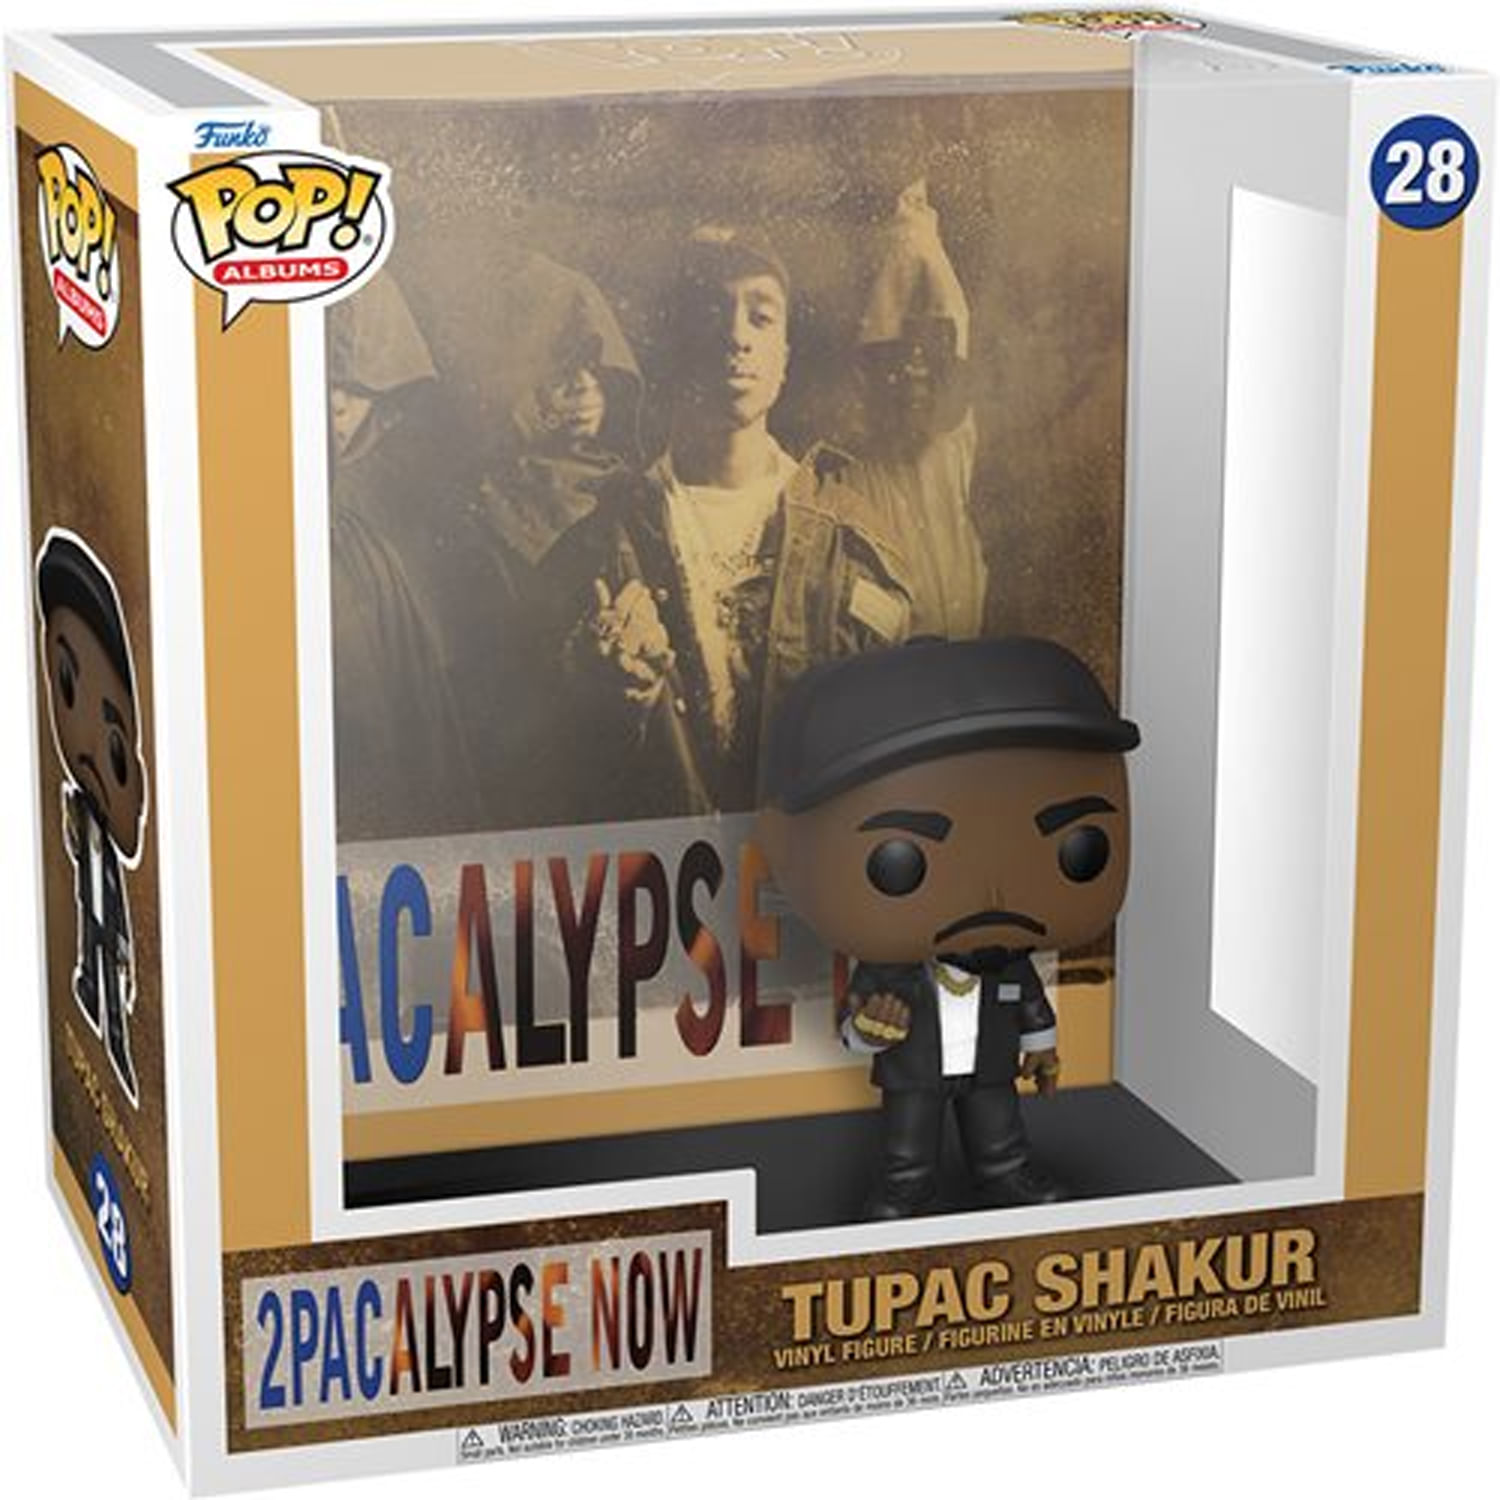 Tupac Shakur 2pacalypse Now Funko Pop Album Figure with Case 28